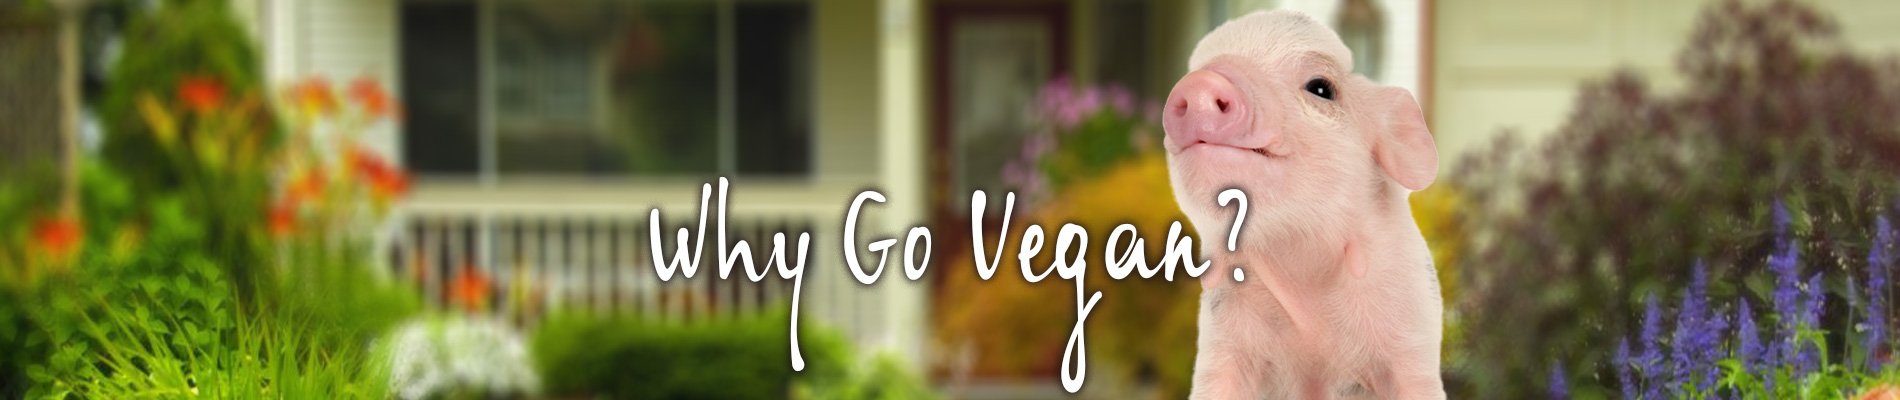 Why-Go-Vegan-Slider-1900x400